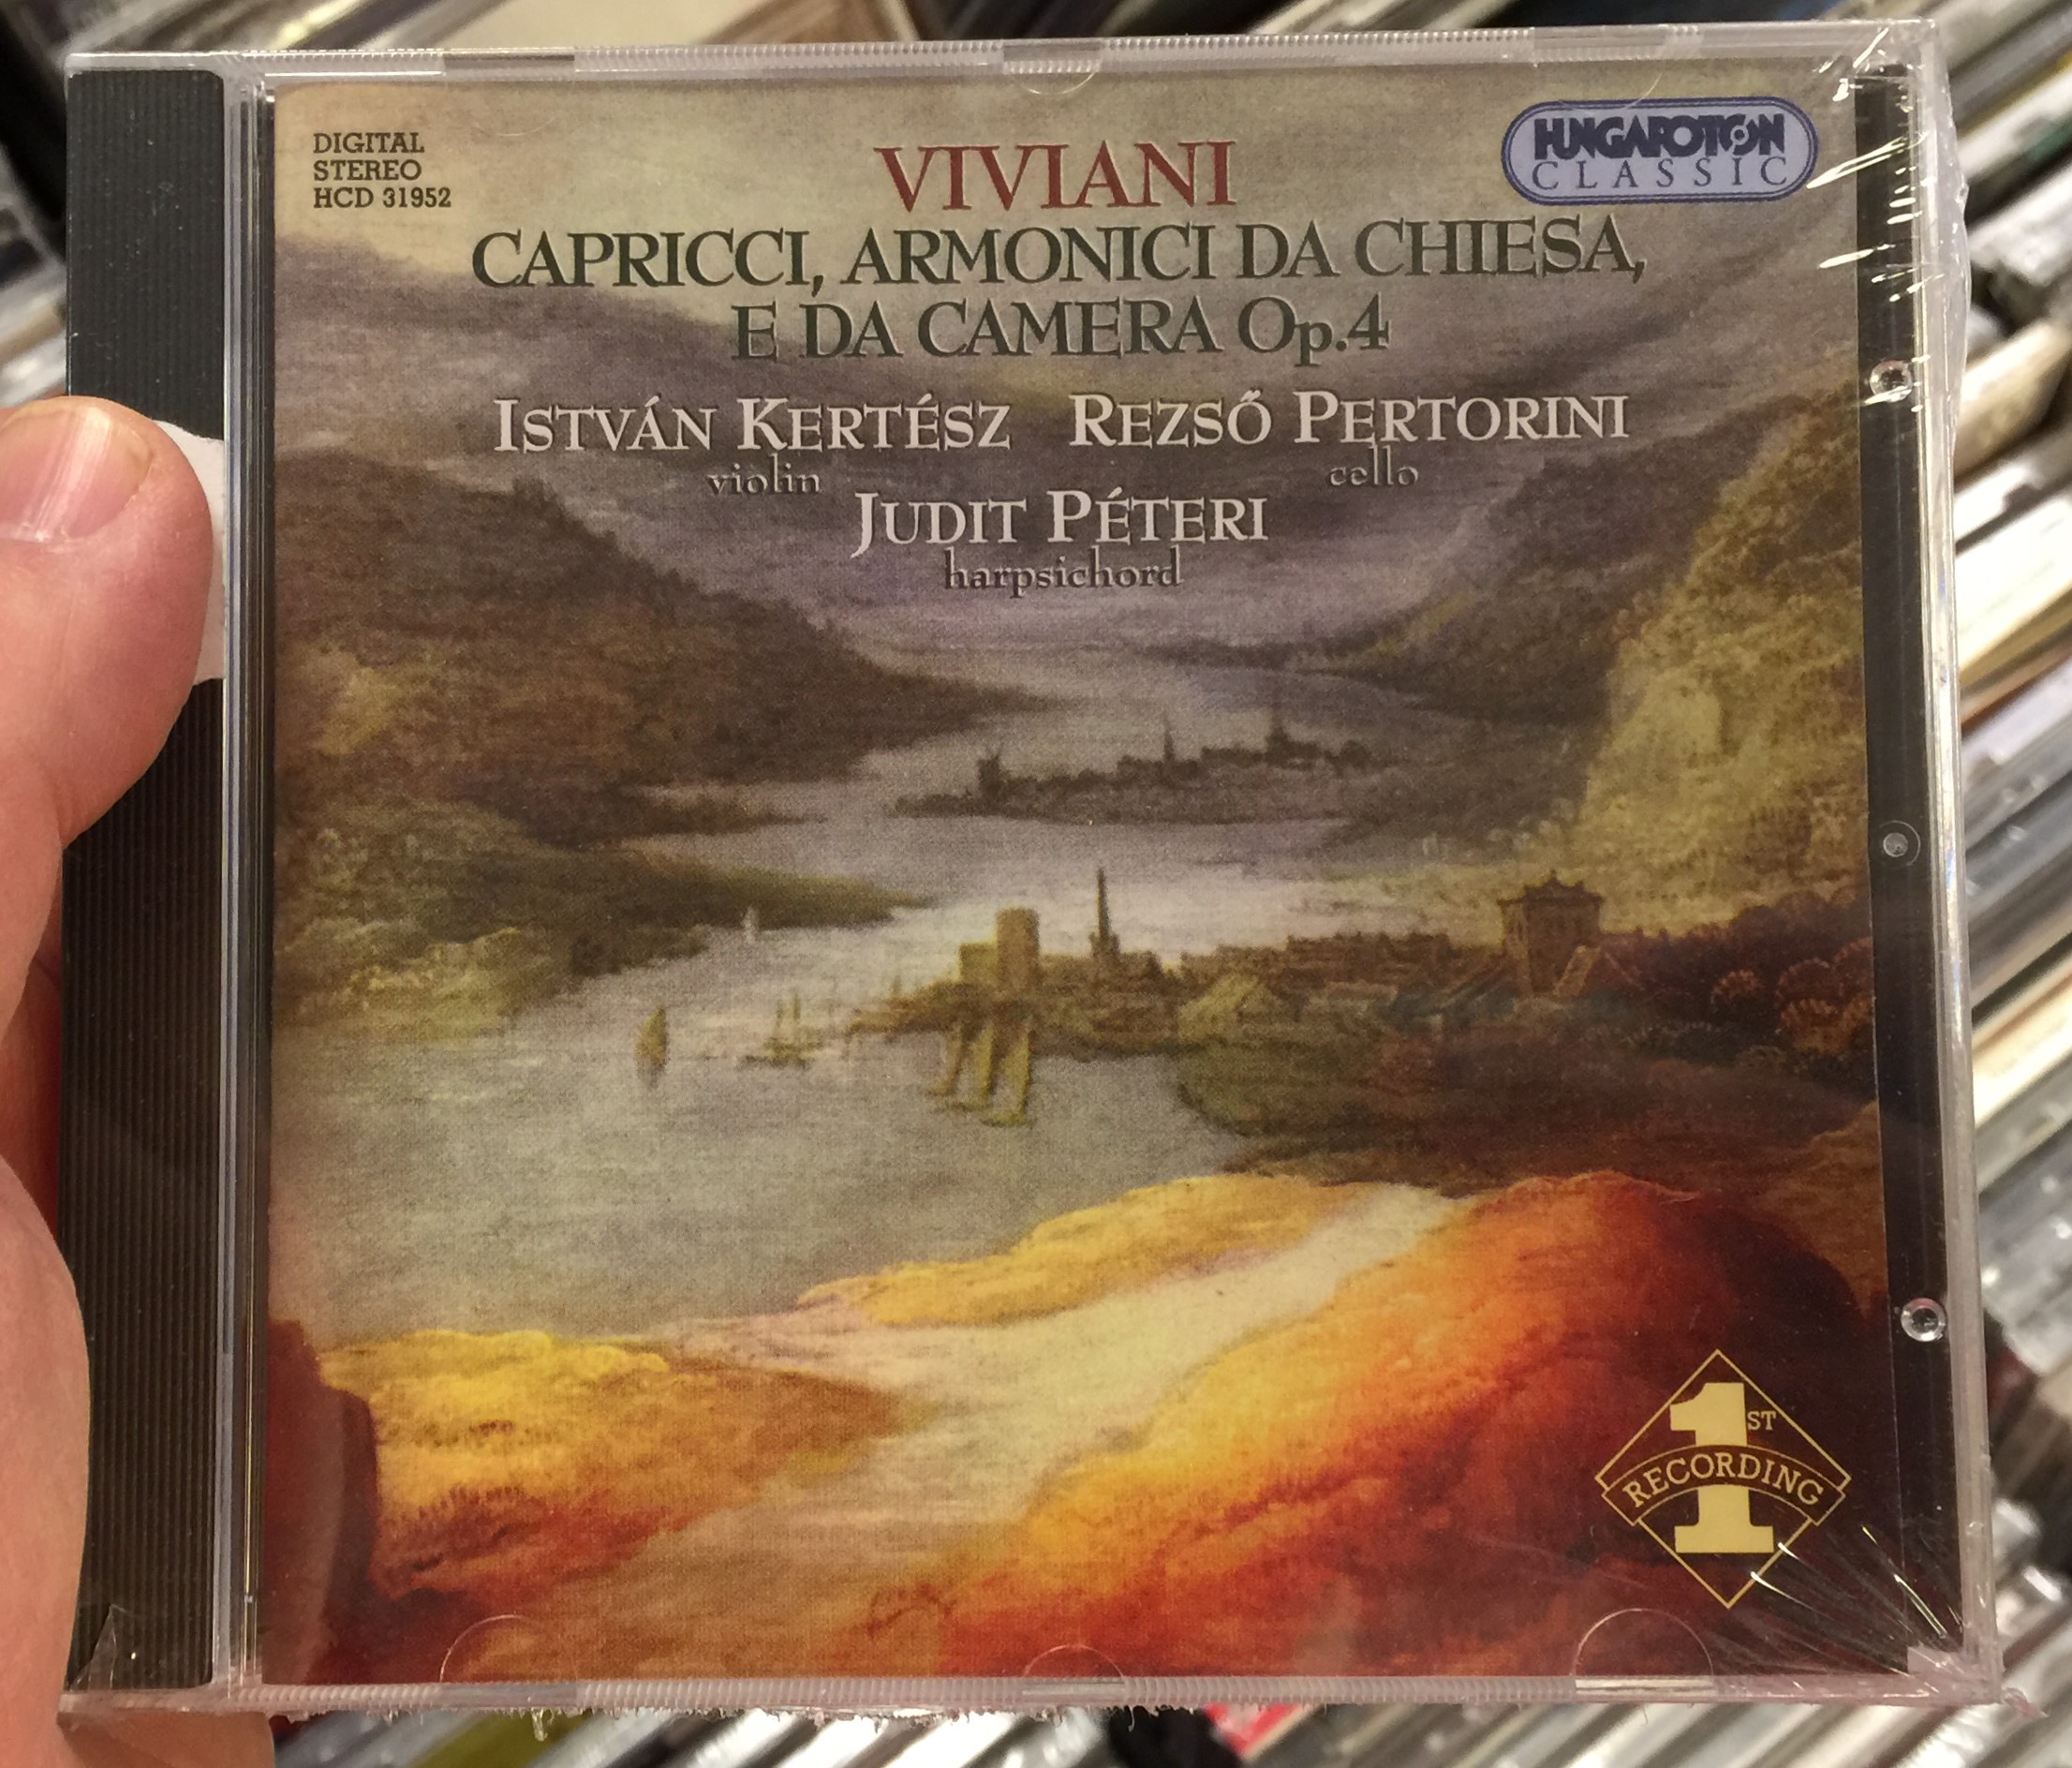 viviani-capricci-armonici-da-chiesa-e-da-camera-op.-4-istvan-kertesz-violin-rezso-pertorini-cello-judit-peteri-harpsichord-hungaroton-classic-audio-cd-2000-stereo-hcd-31952-1-.jpg